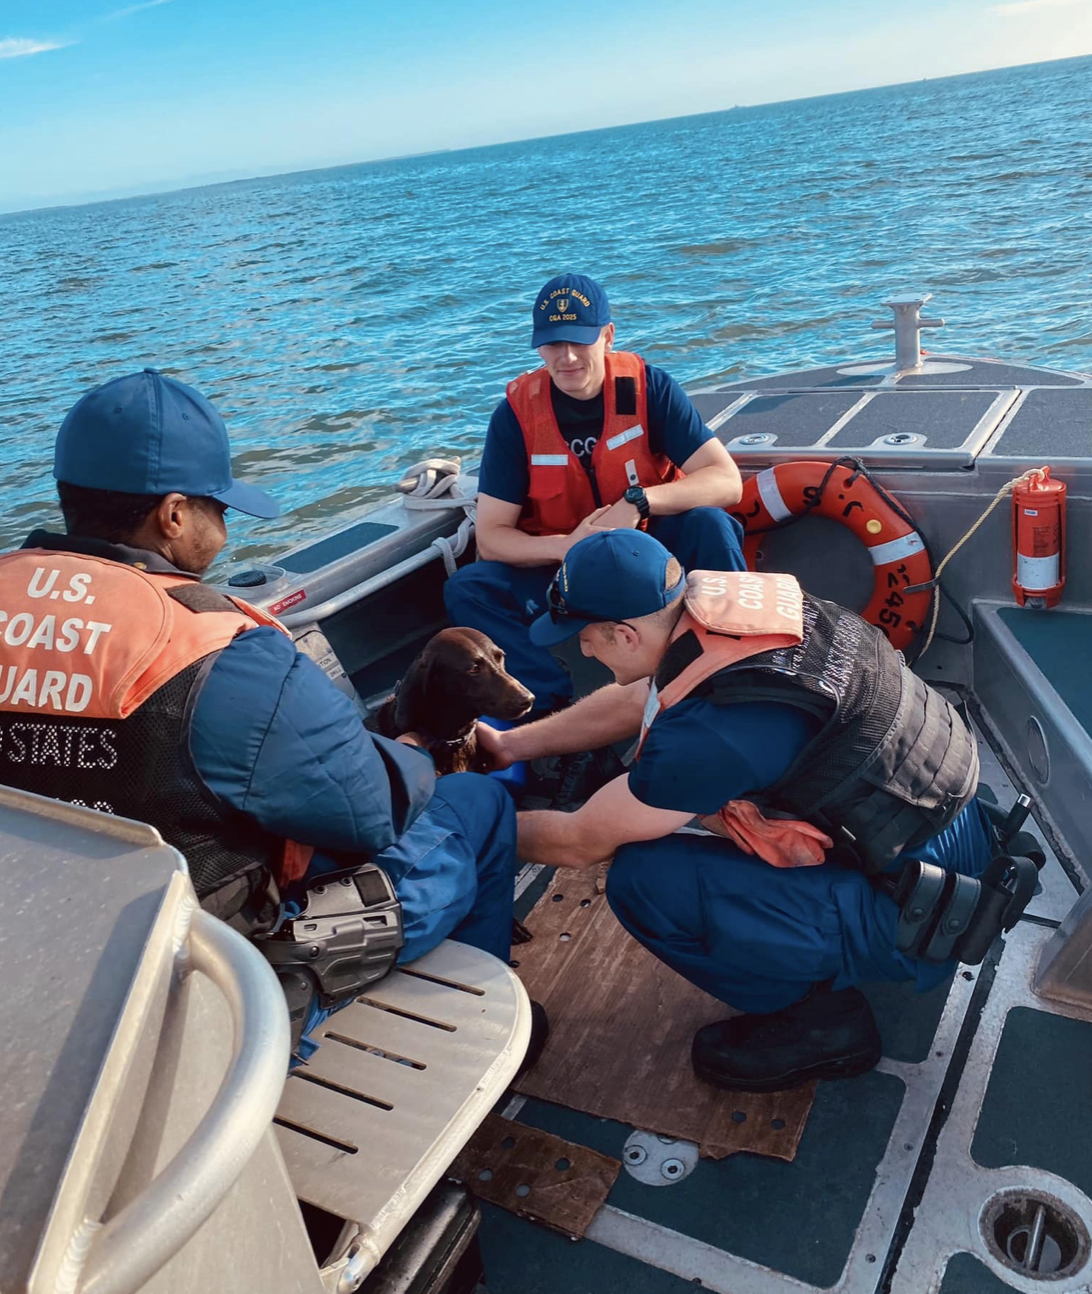 U.S. Coast Guard checking dog for injuries